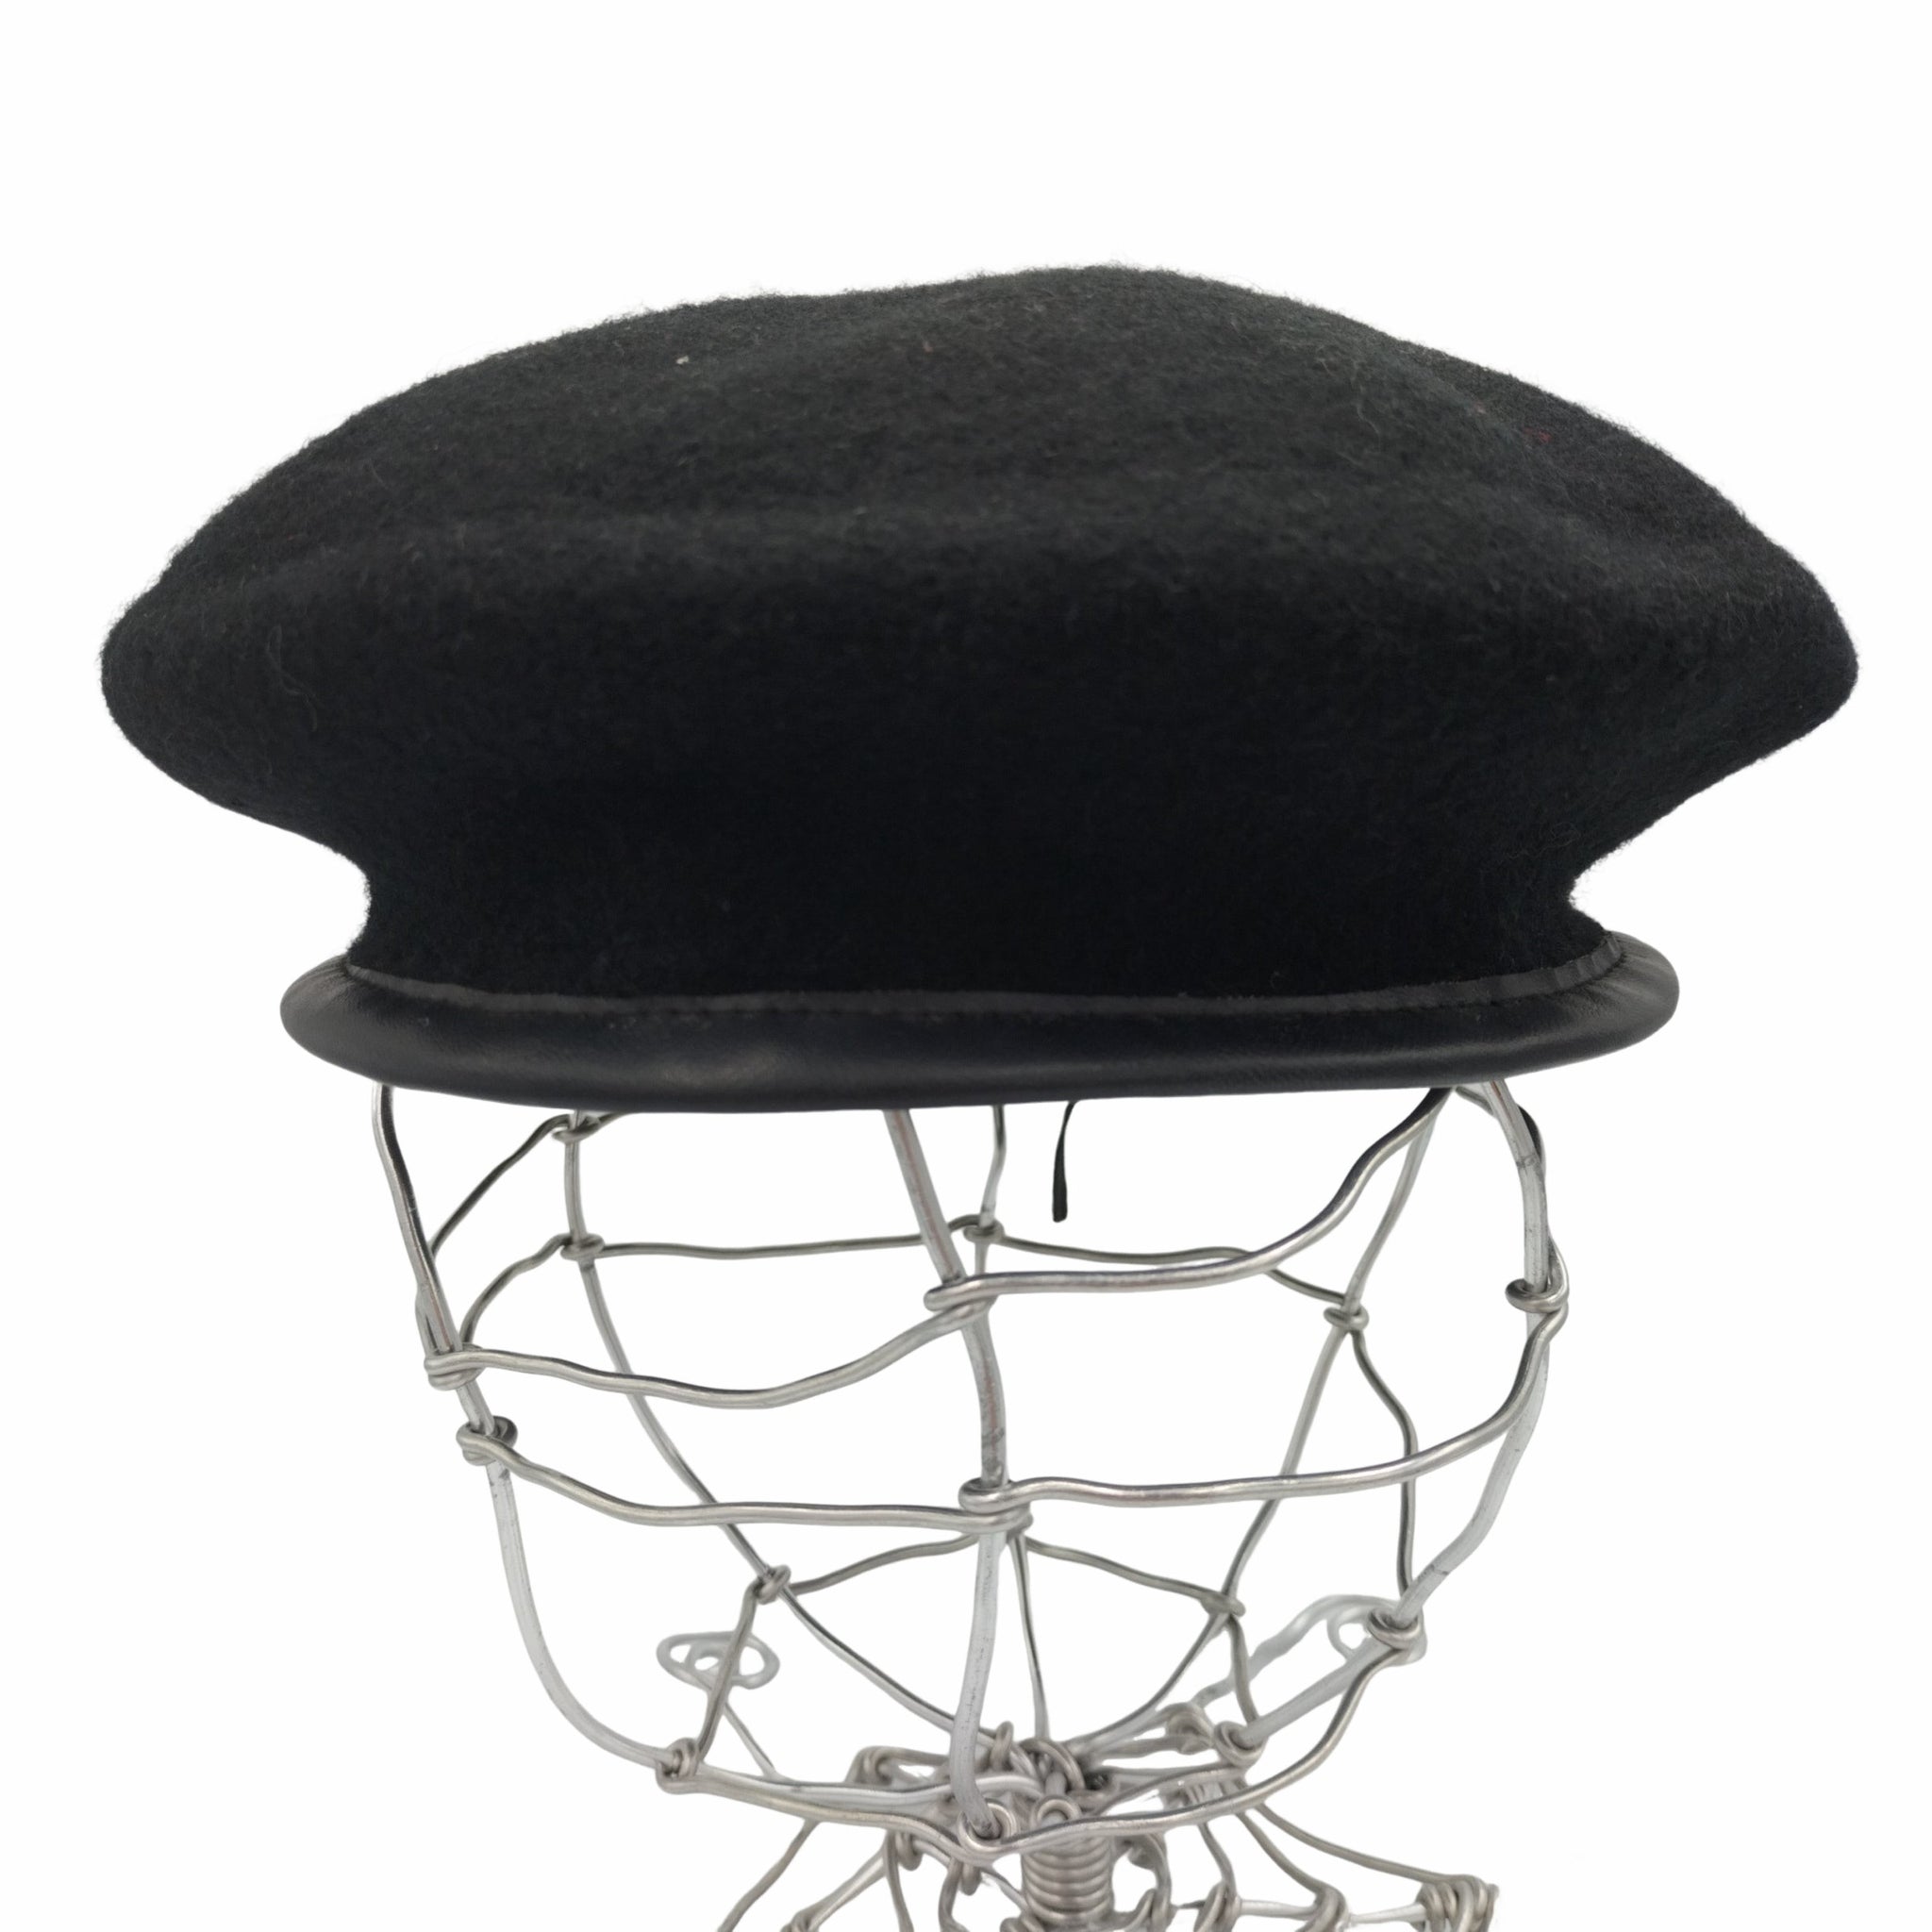 FRENCH ARMY(フレンチアーミー)ミリタリー ウール ベレー帽